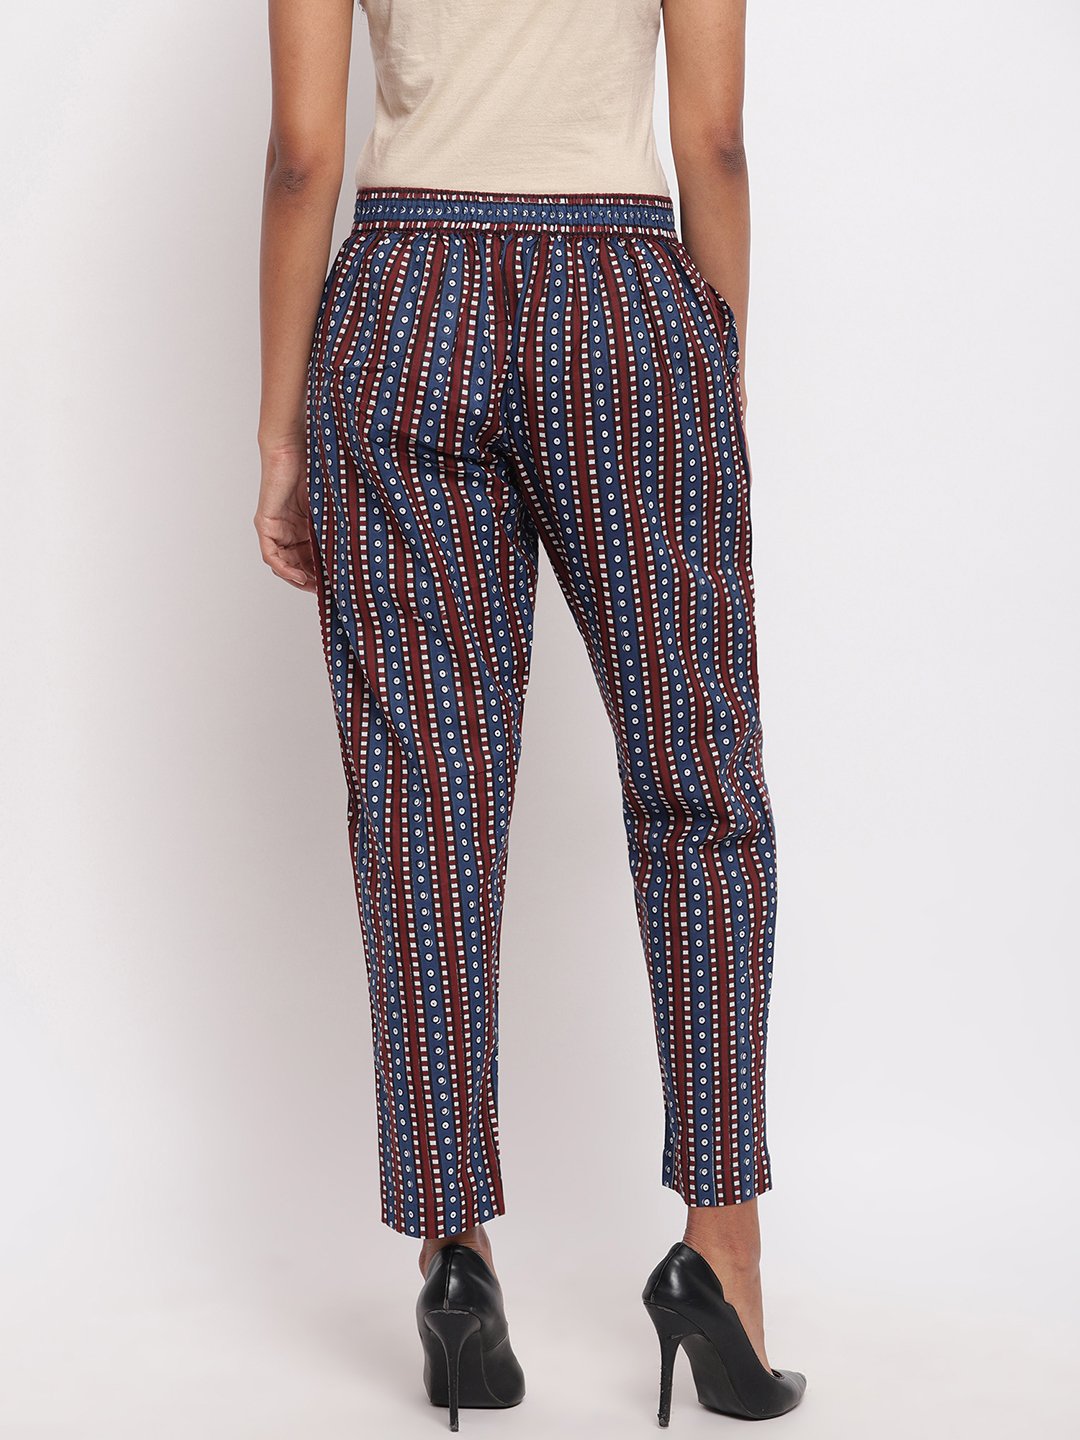 Indigo Patterned Stripe Cotton Pants